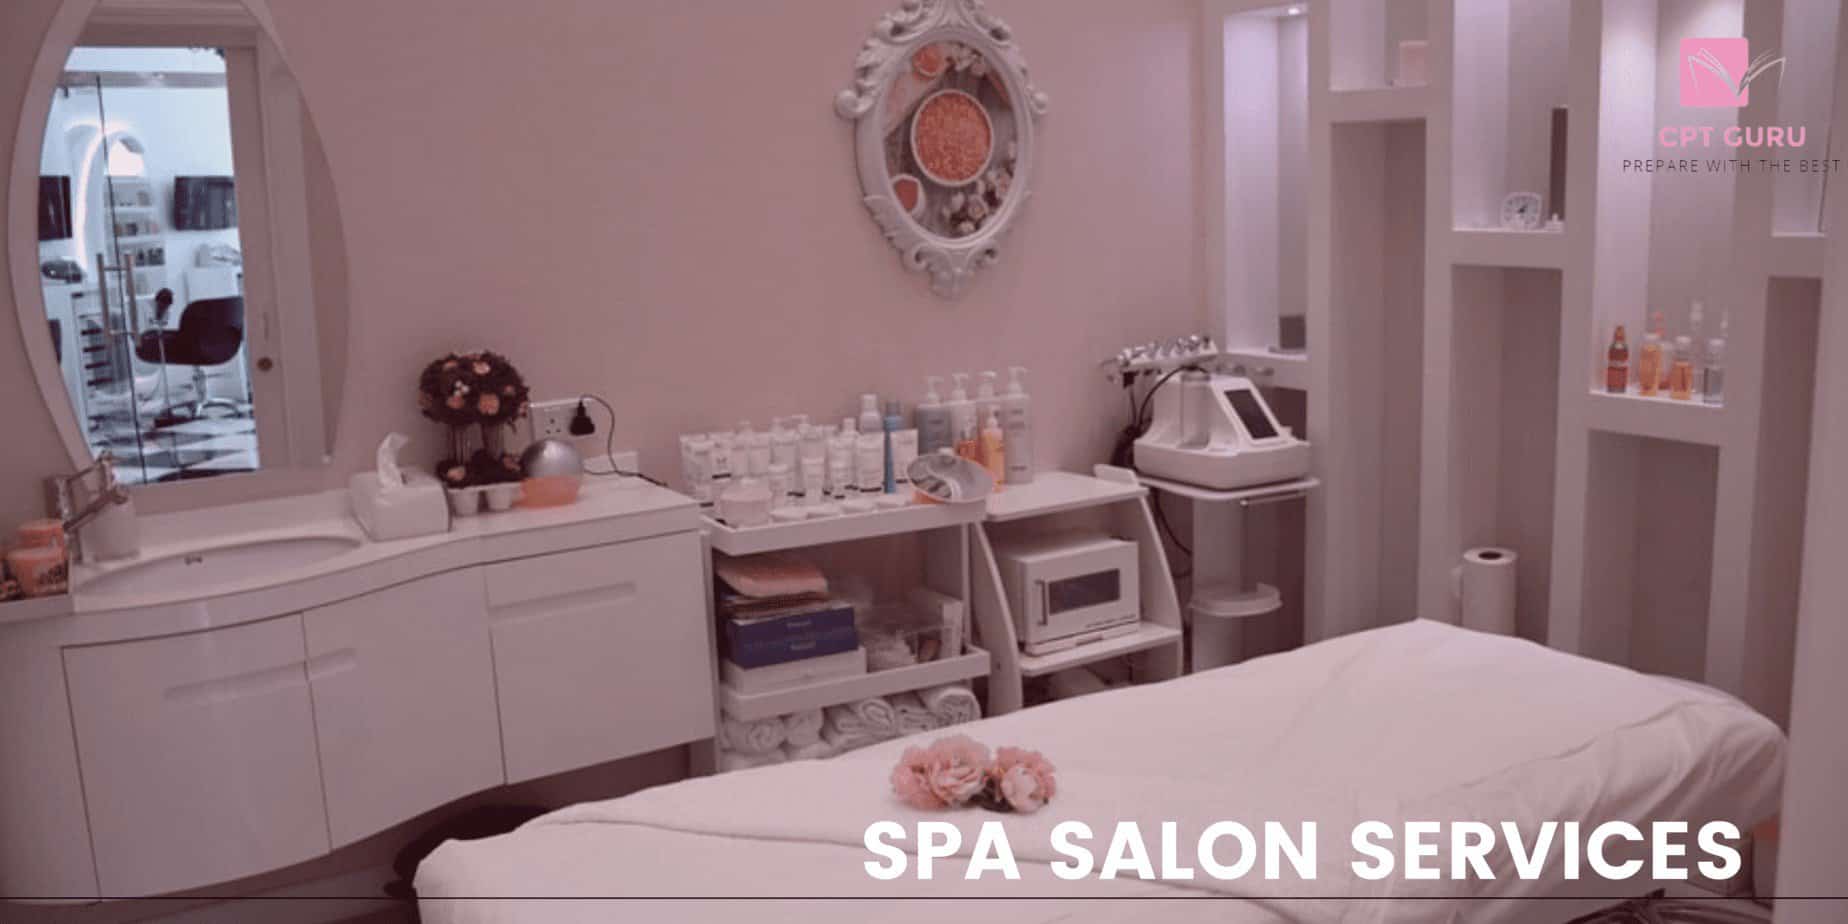 Spa services in beauty salon 